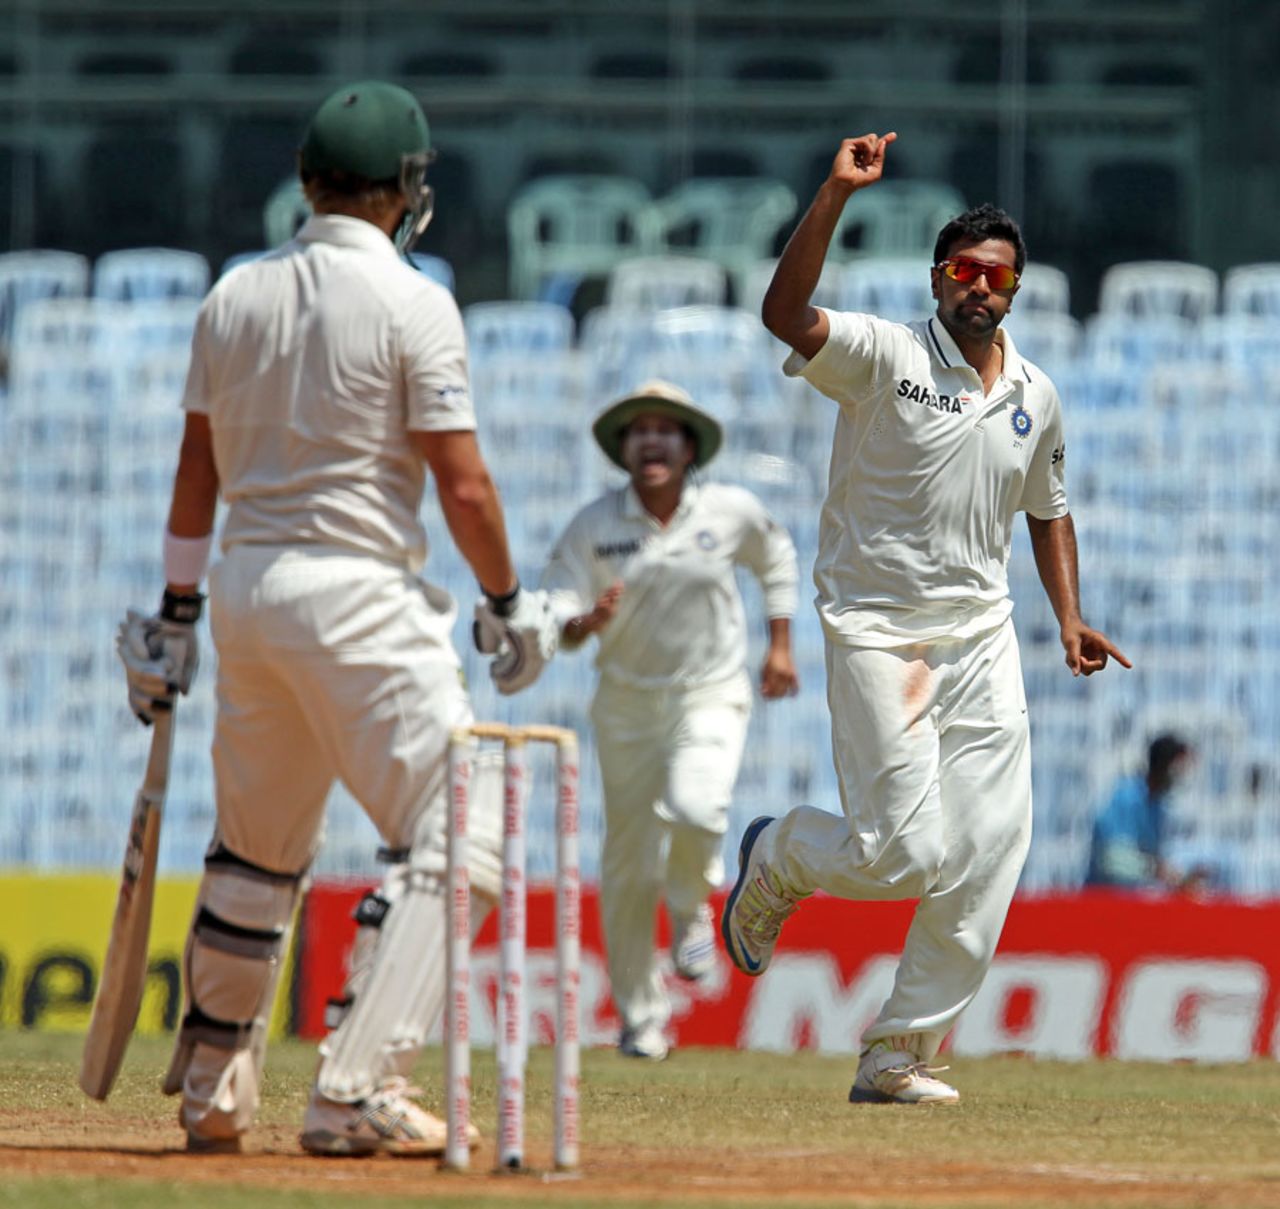 R Ashwin got rid of Shane Watson cheaply, India v Australia, 1st Test, Chennai, 4th day, February 25, 2013